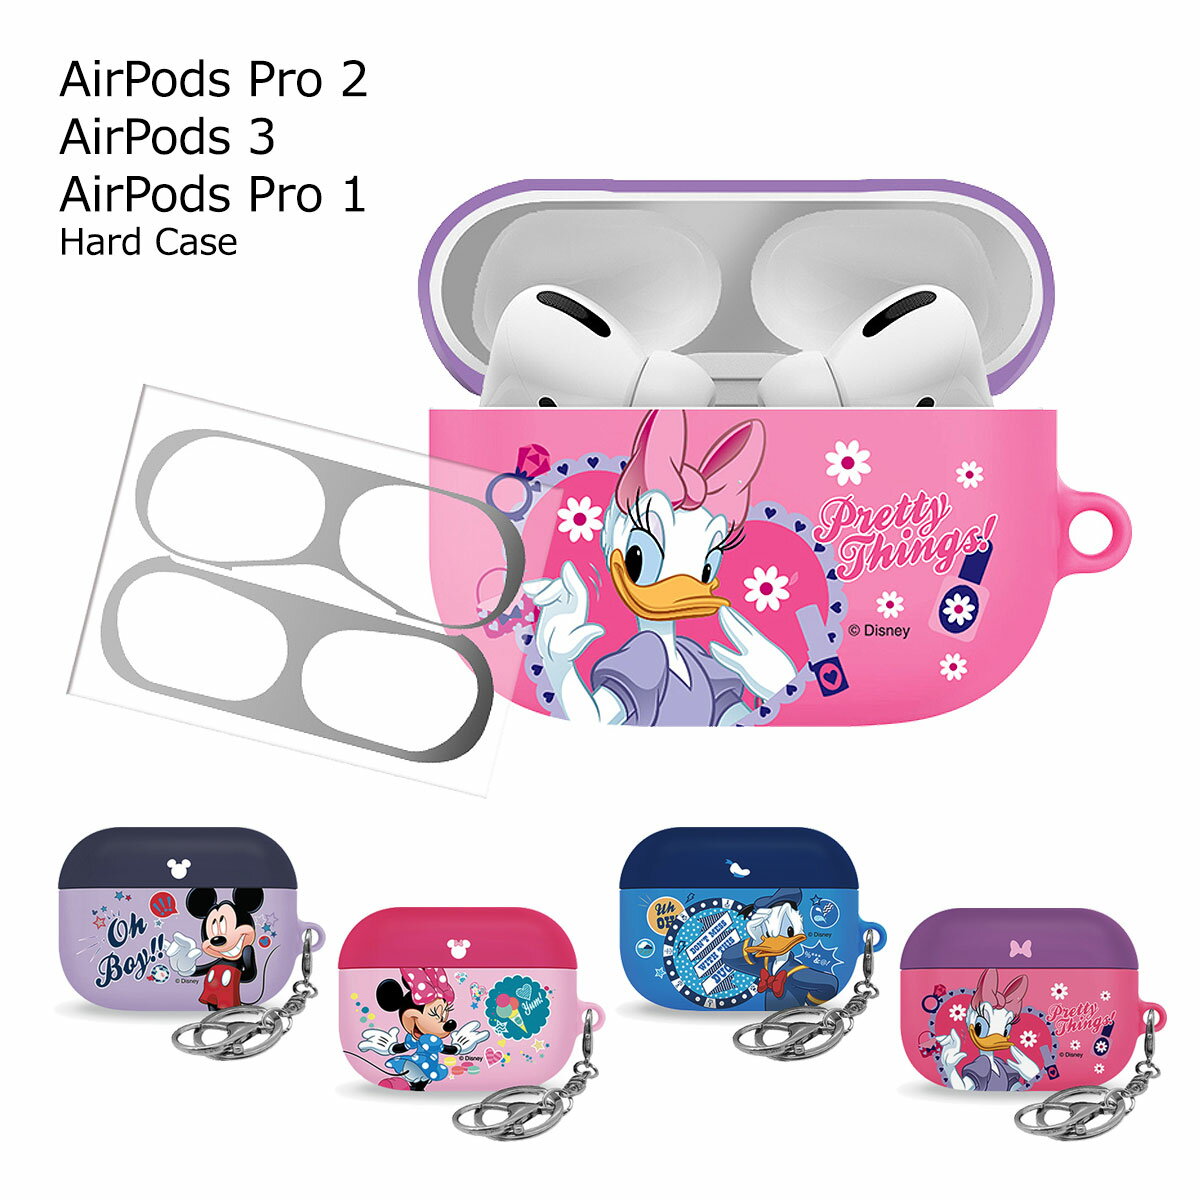 Disney AirPods (Pro) Hard Case